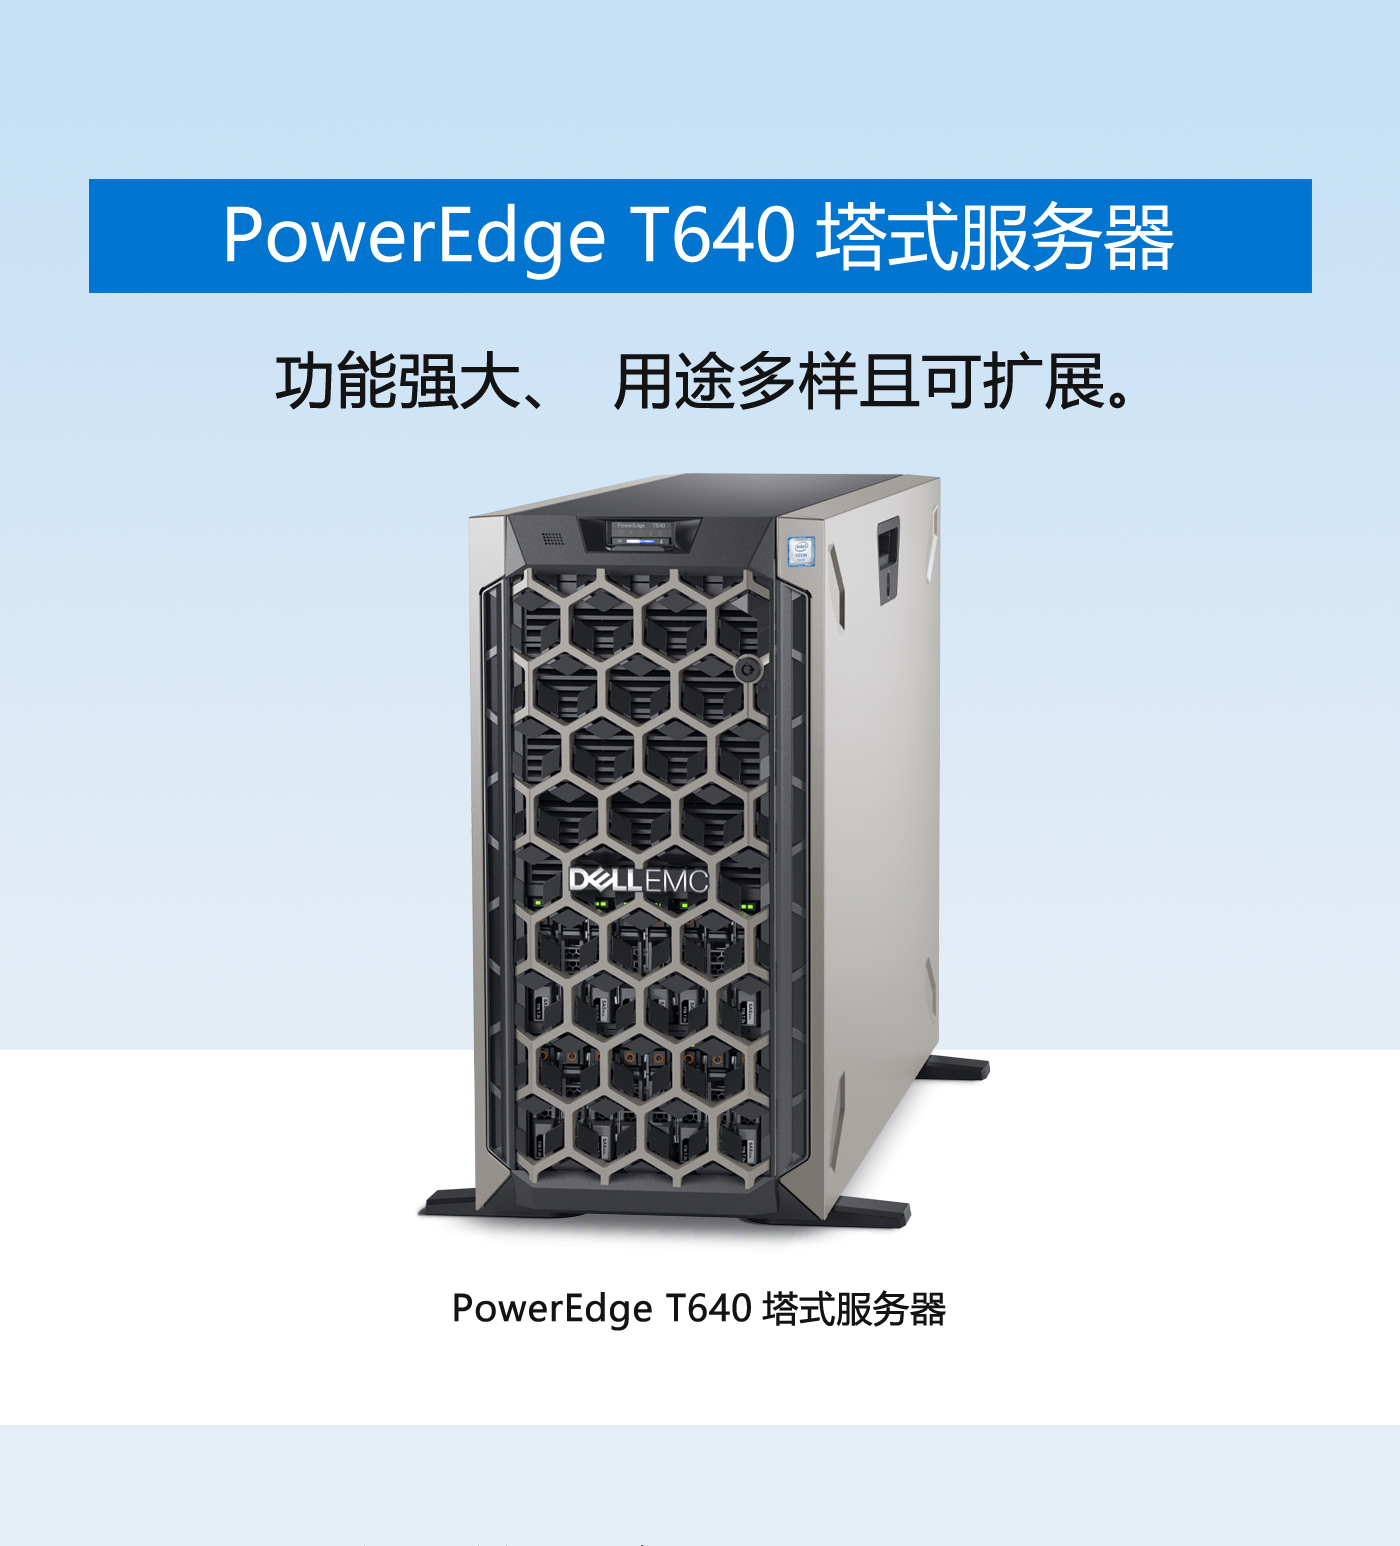 【产品推荐】塔式服务器——戴尔PowerEdge T640